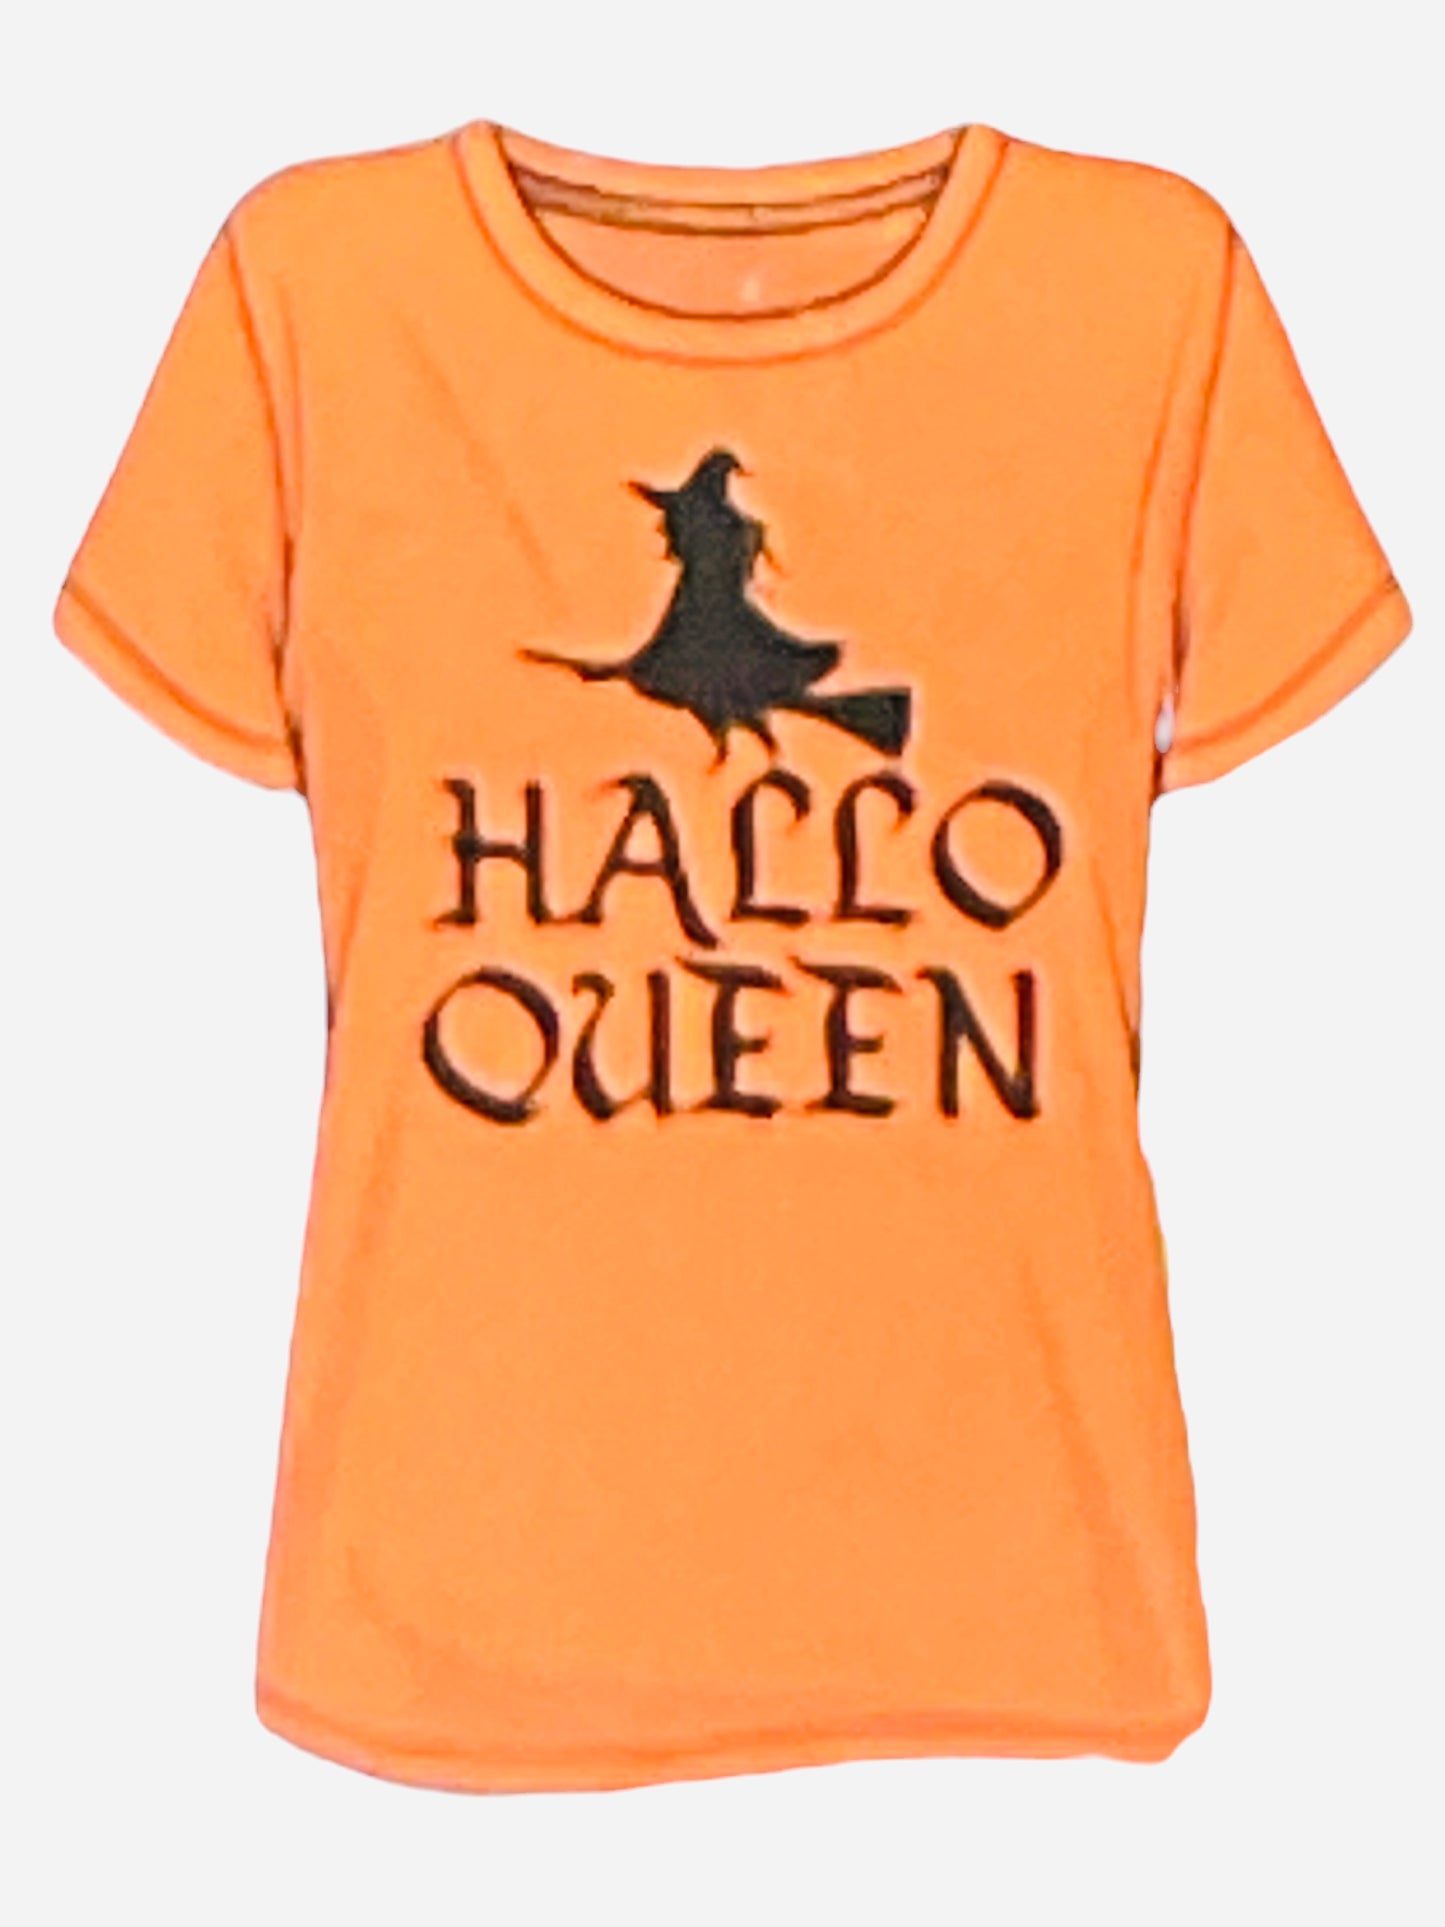 Hallo-Queen Ladies Tee (Choose your size)